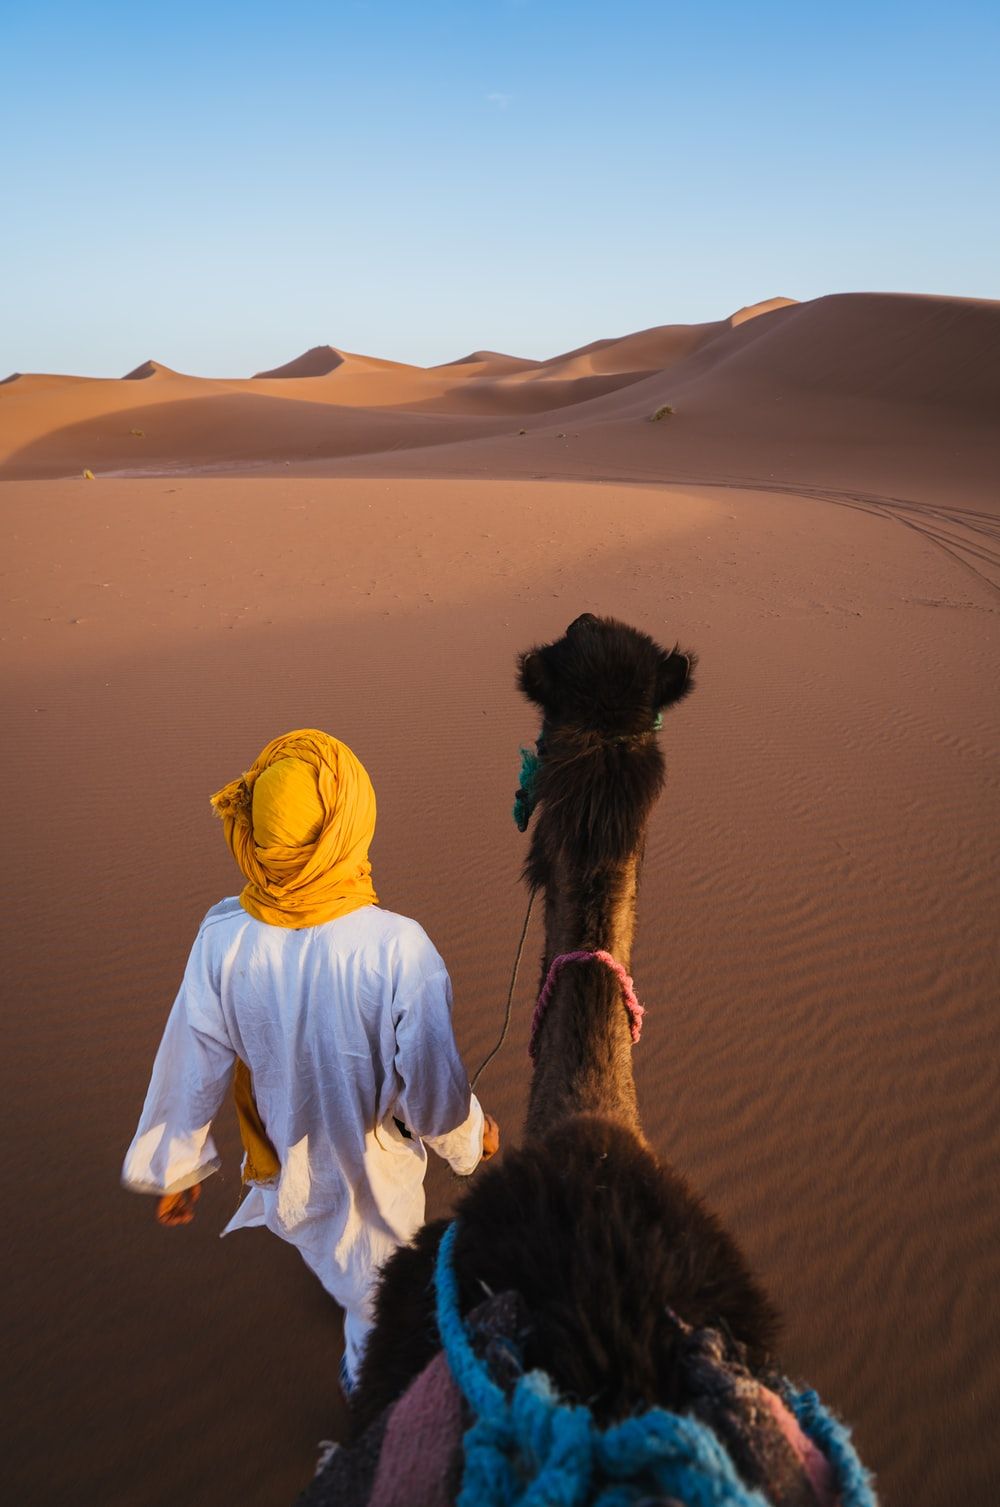 Beautiful Sahara Desert Picture. Download Free Image